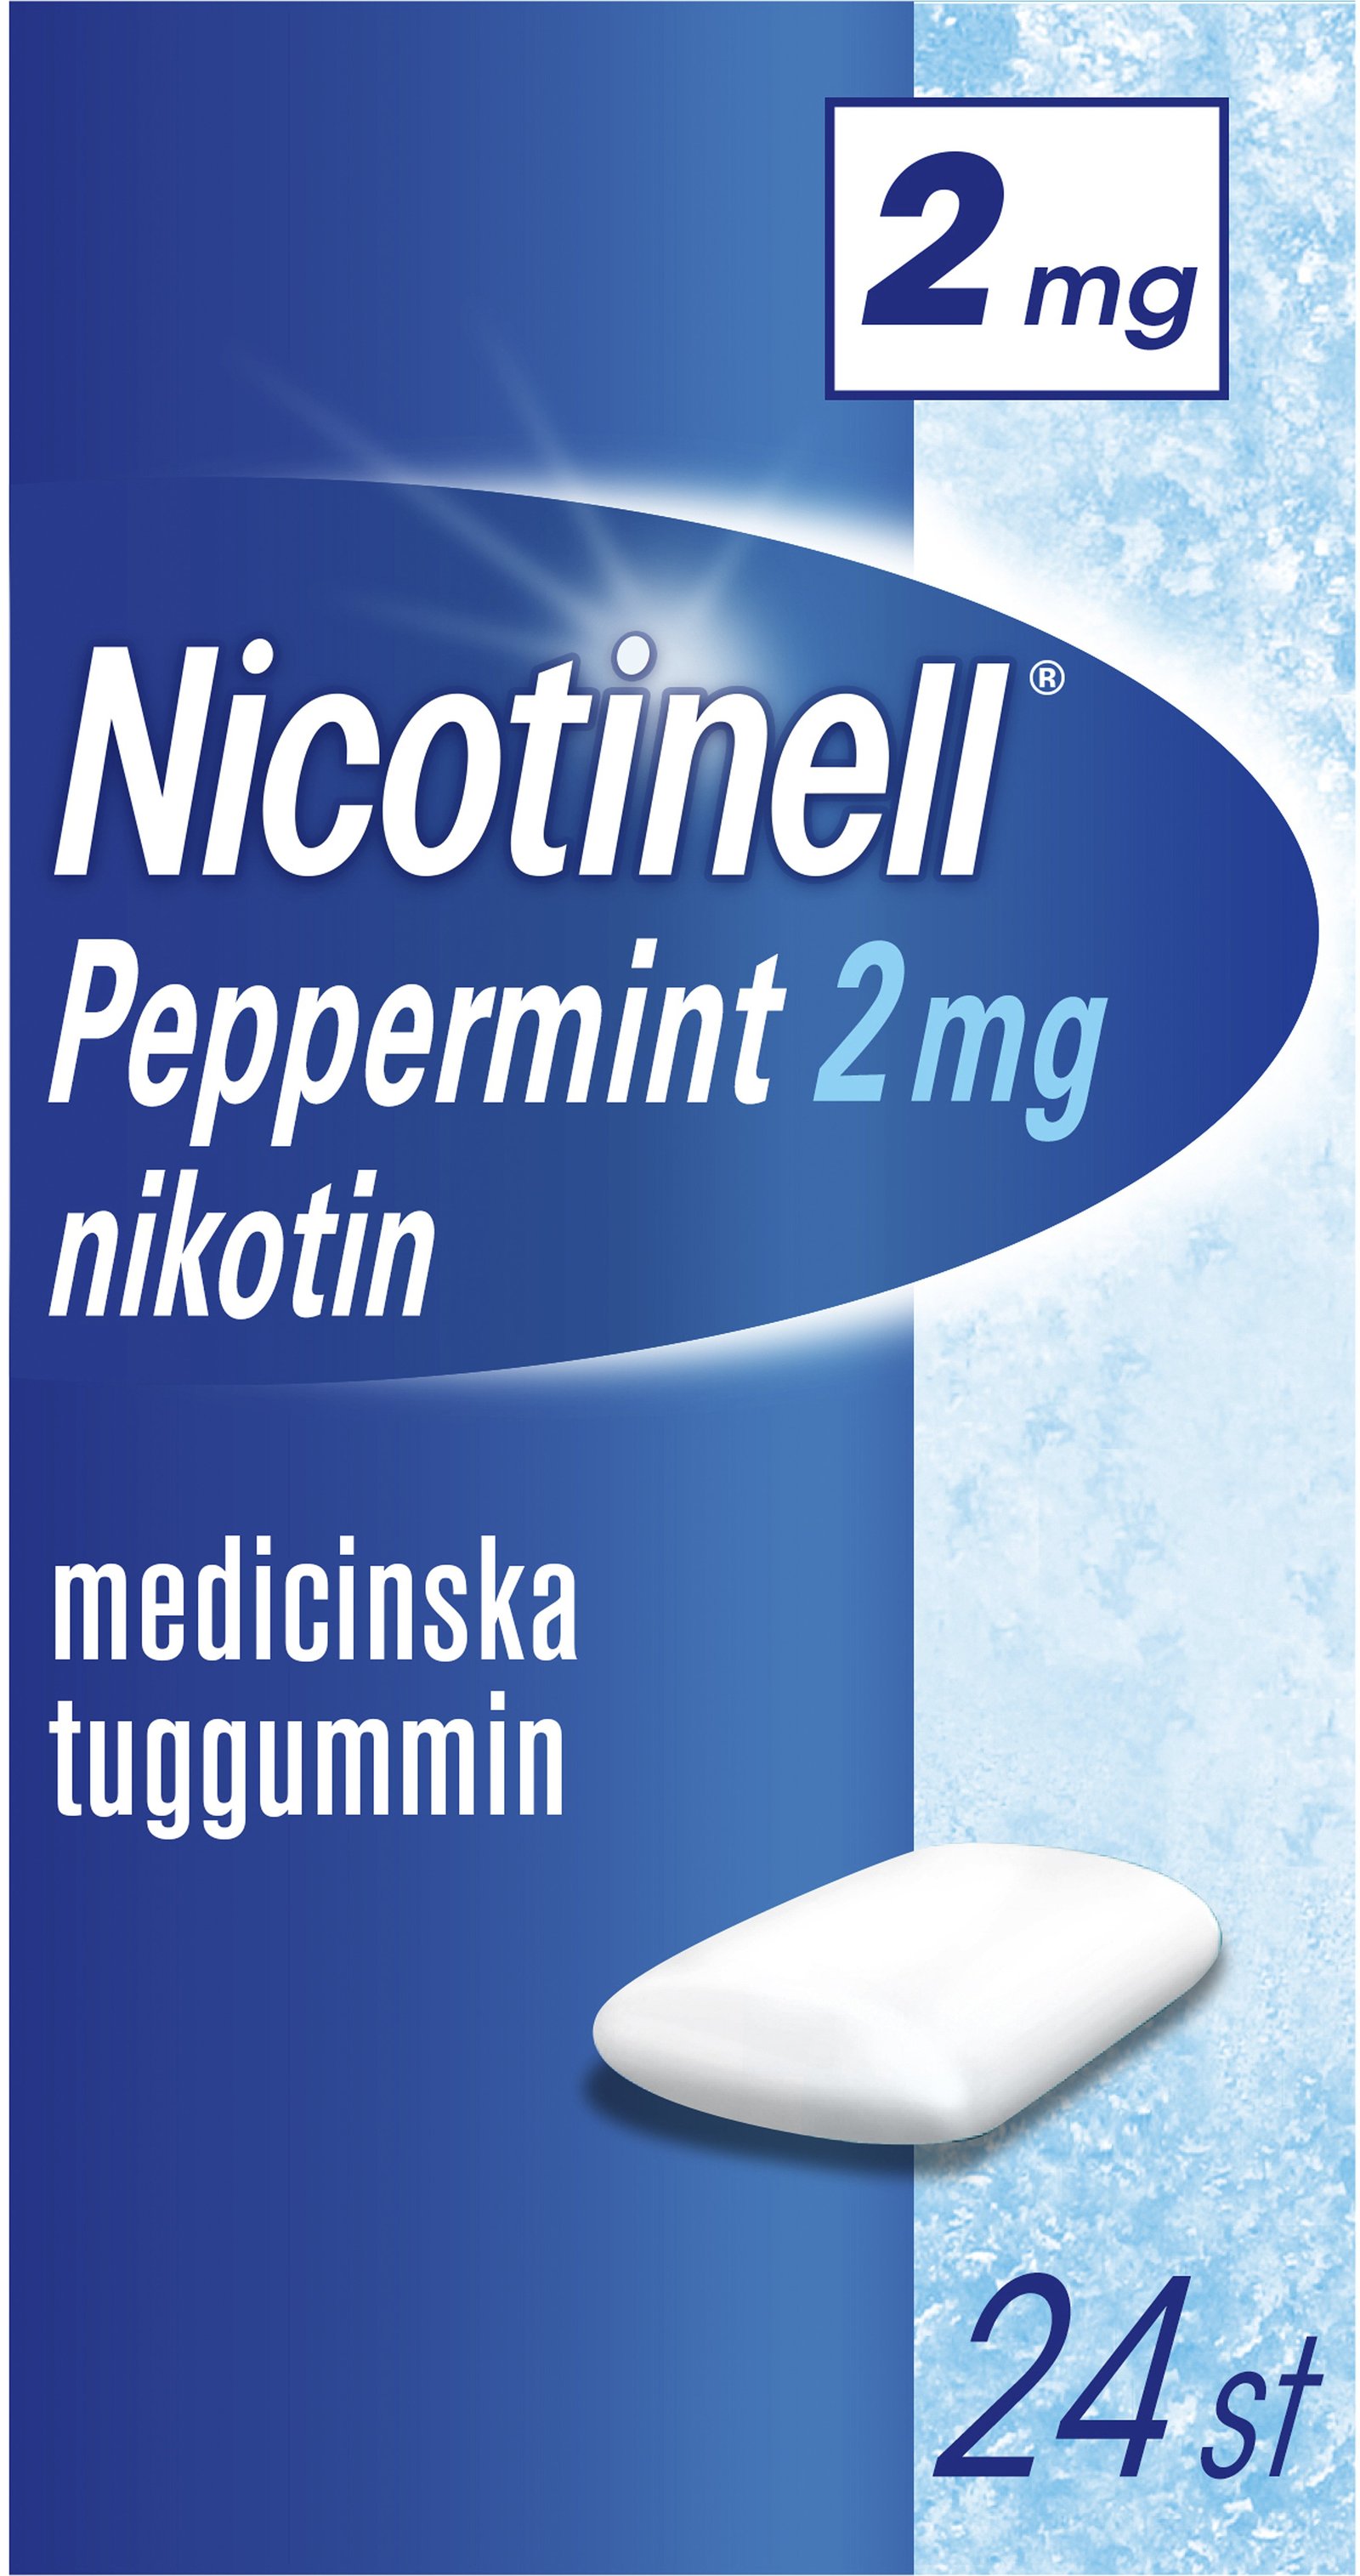 Nicotinell Pepparmint 2 mg Nikotin Medicinska tuggummin 24 st